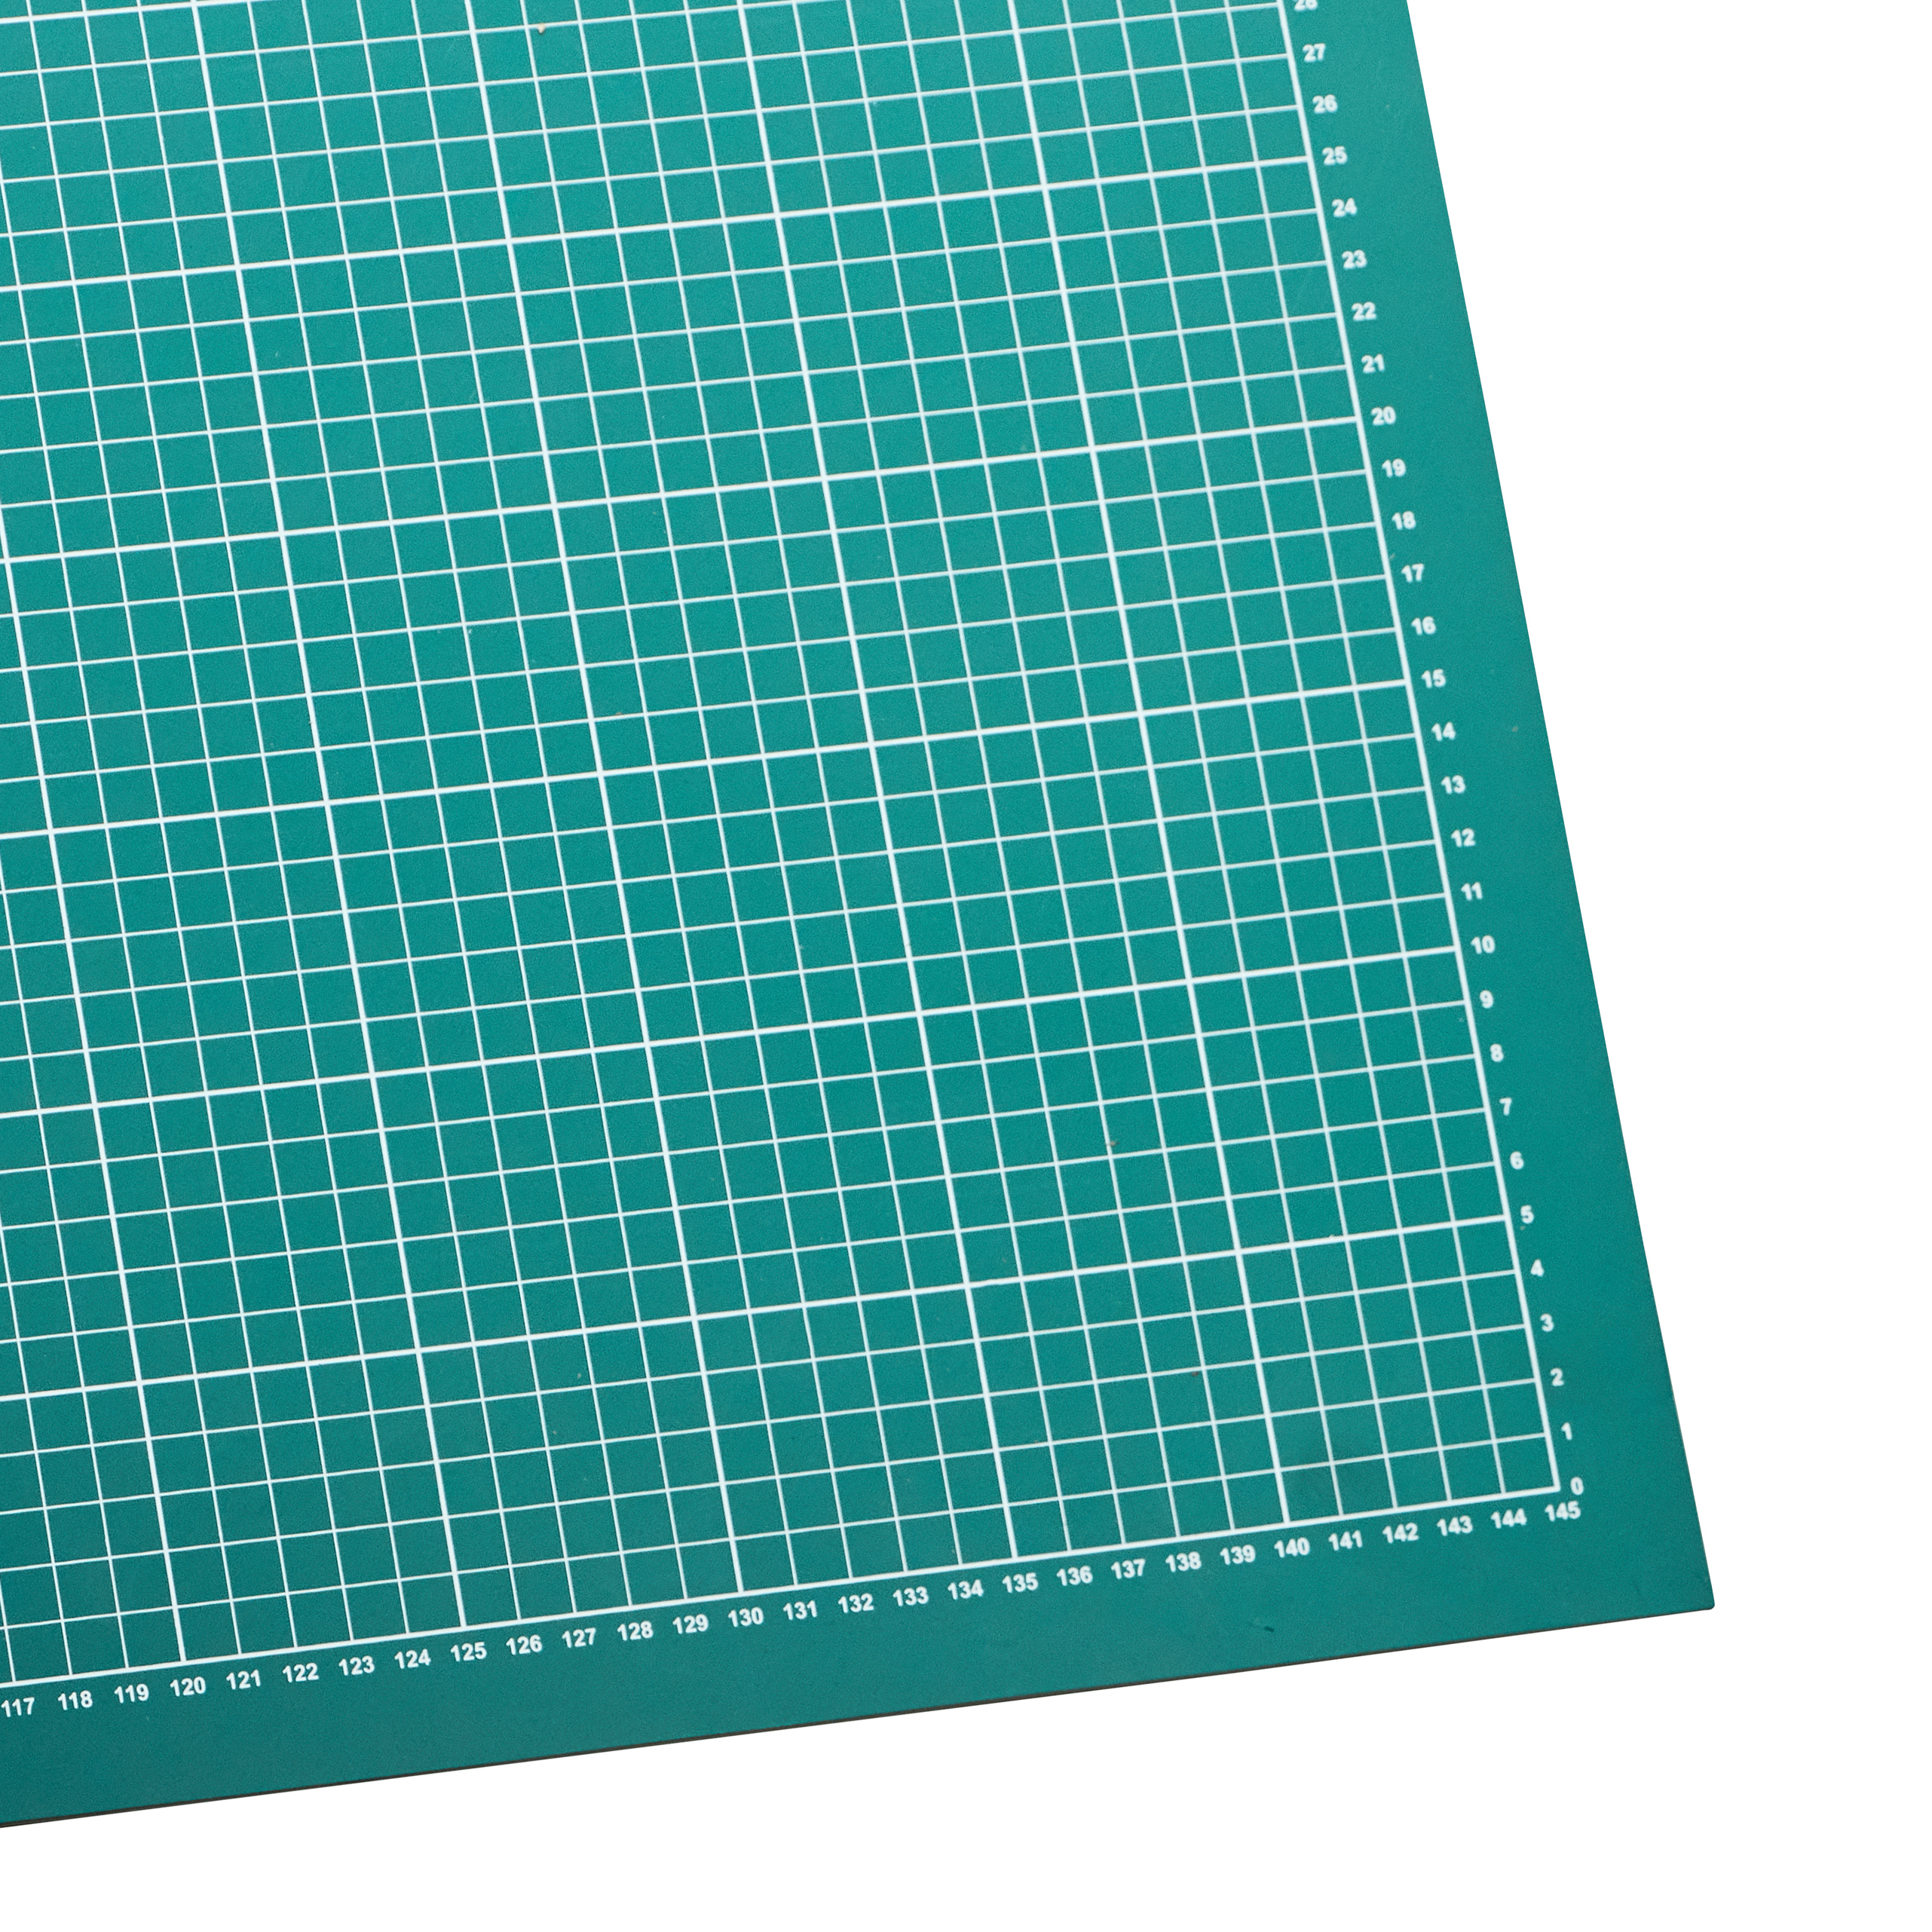 Snijmat XL, 150 x 100 zelfherstellend, met raster/ruitpatroon | SPRINTIS